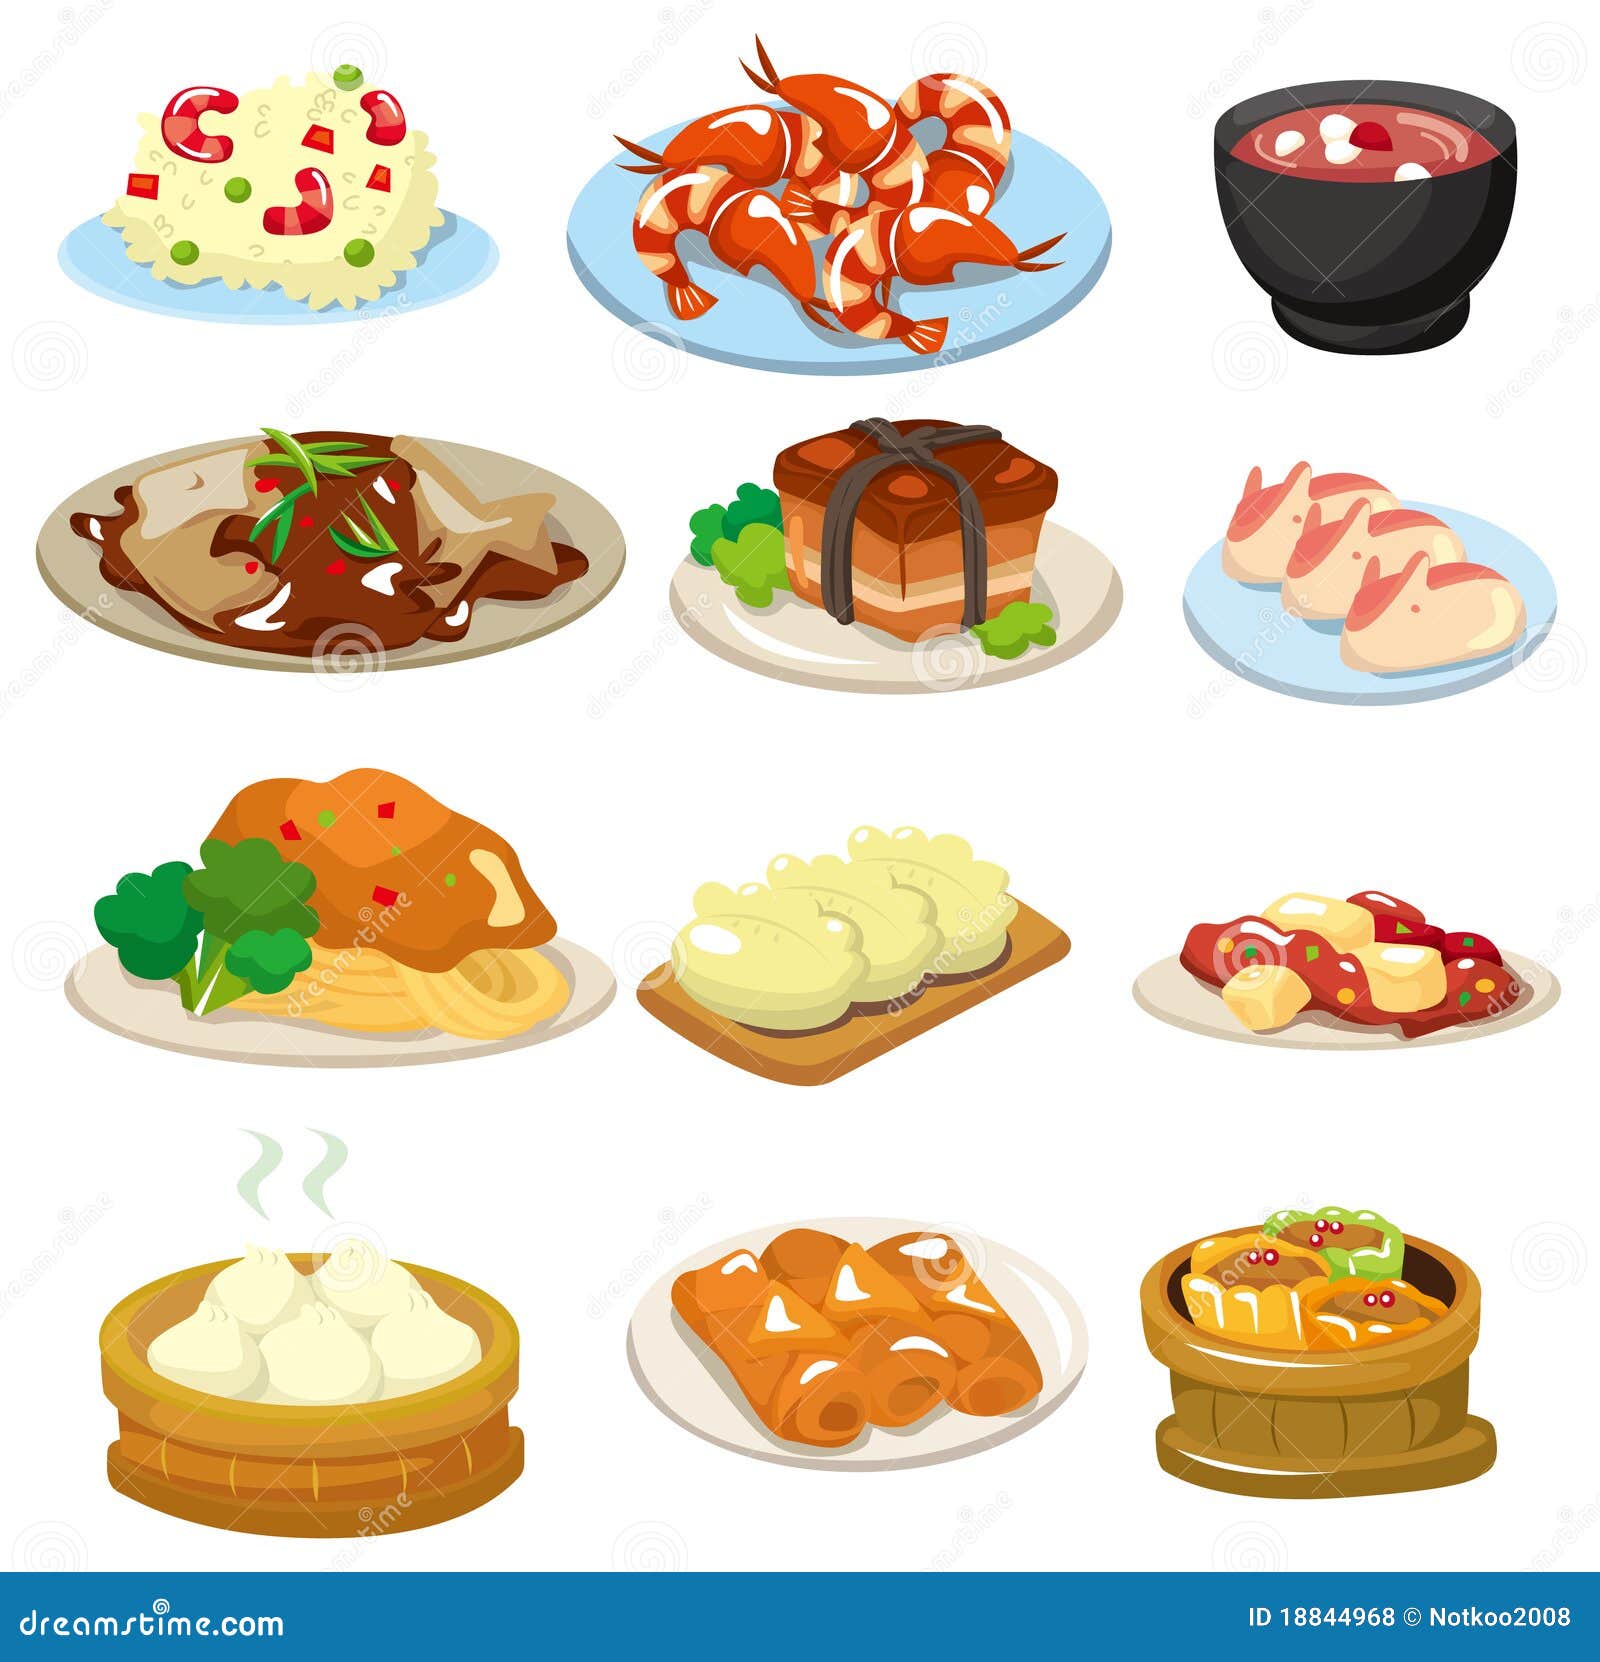 Cartoon chinese food icon stock vector. Illustration of cuisine - 18844968